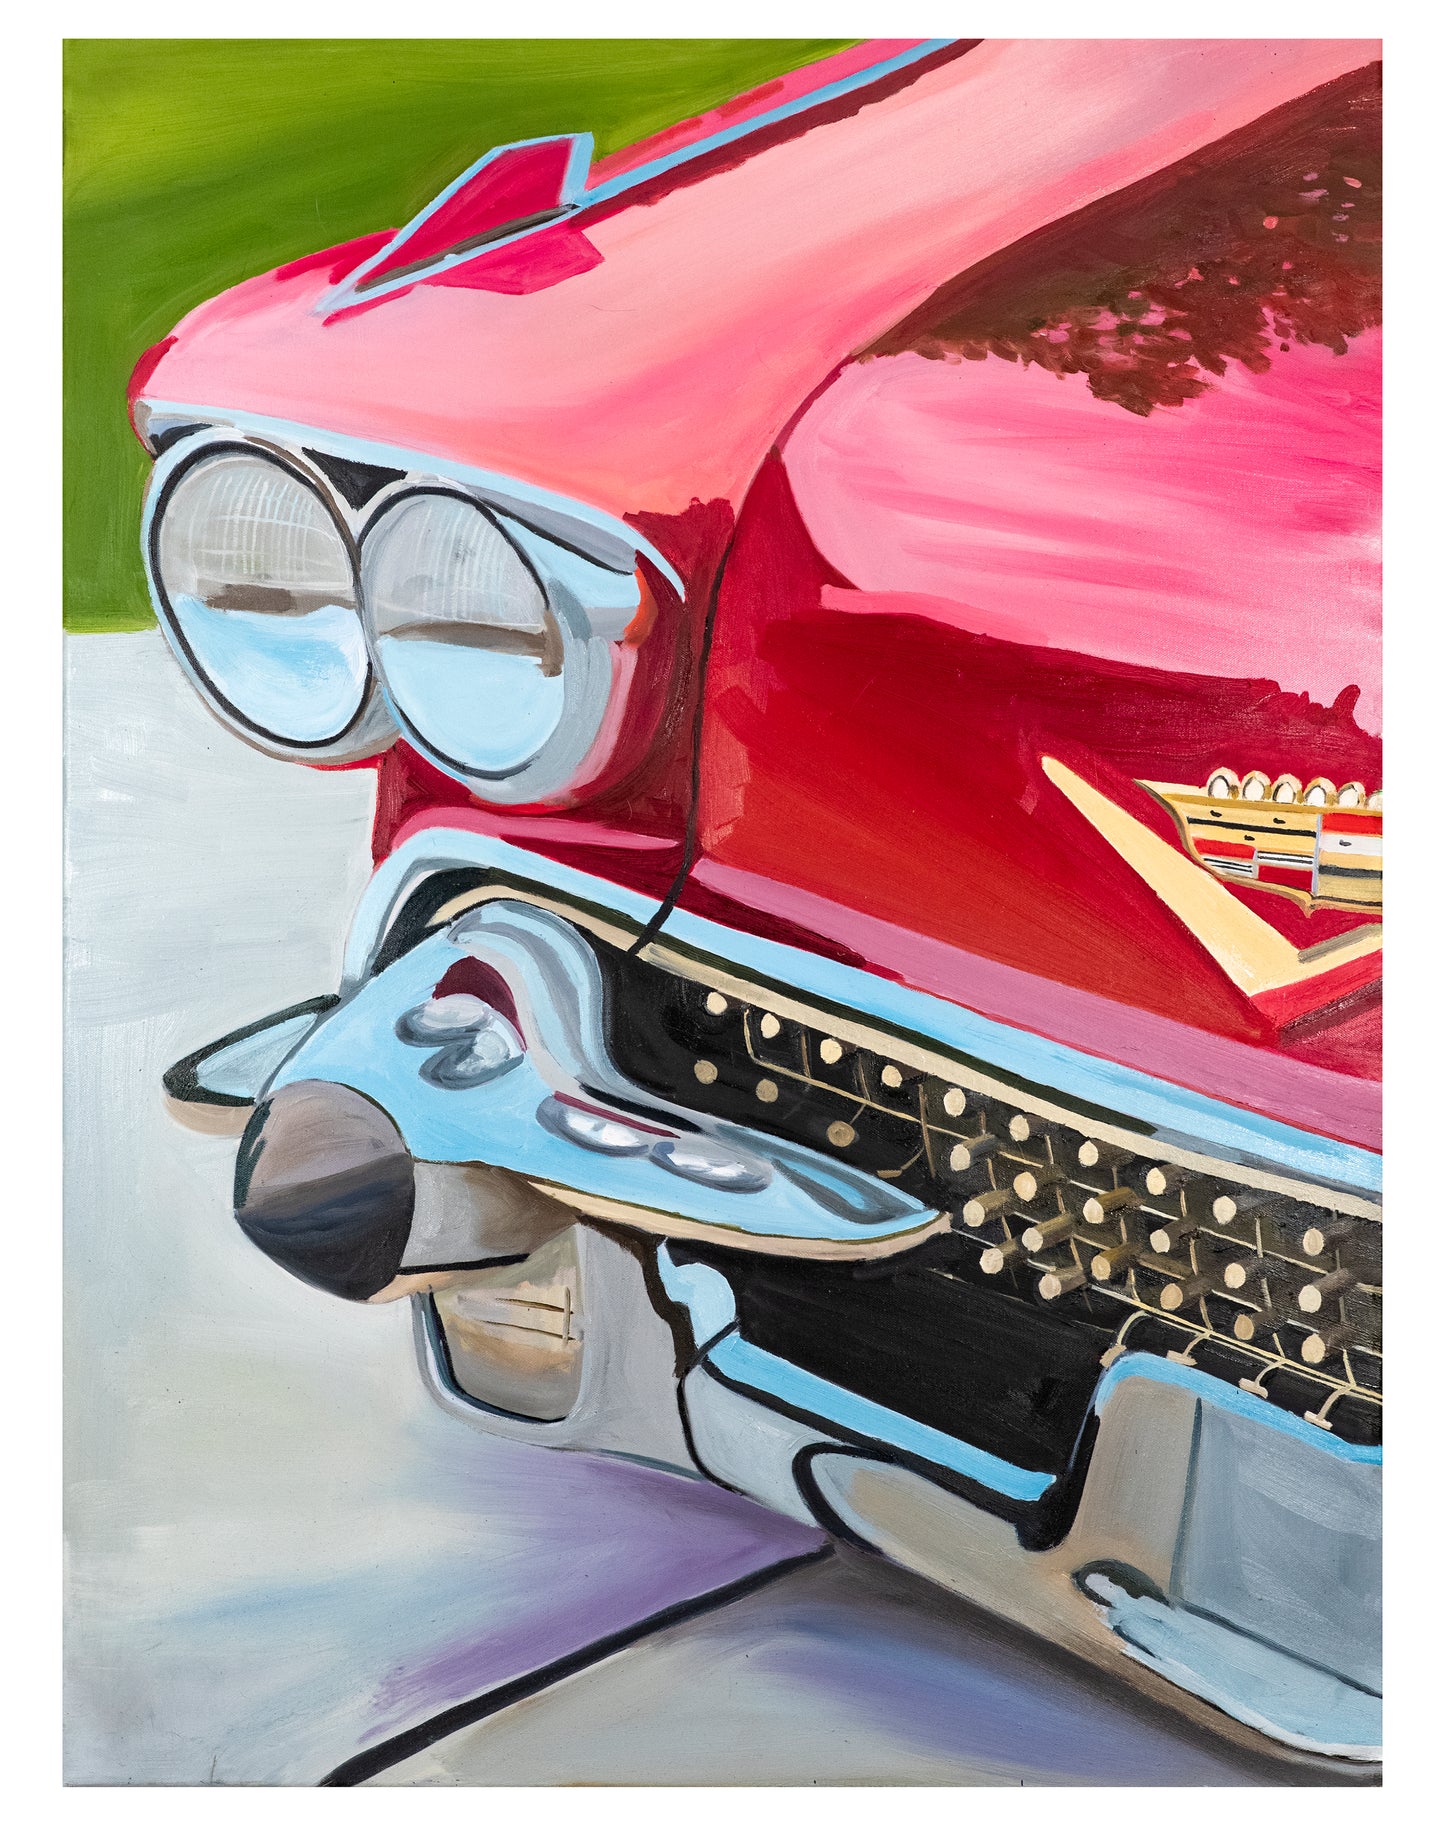 1958 Cadillac Giclee print